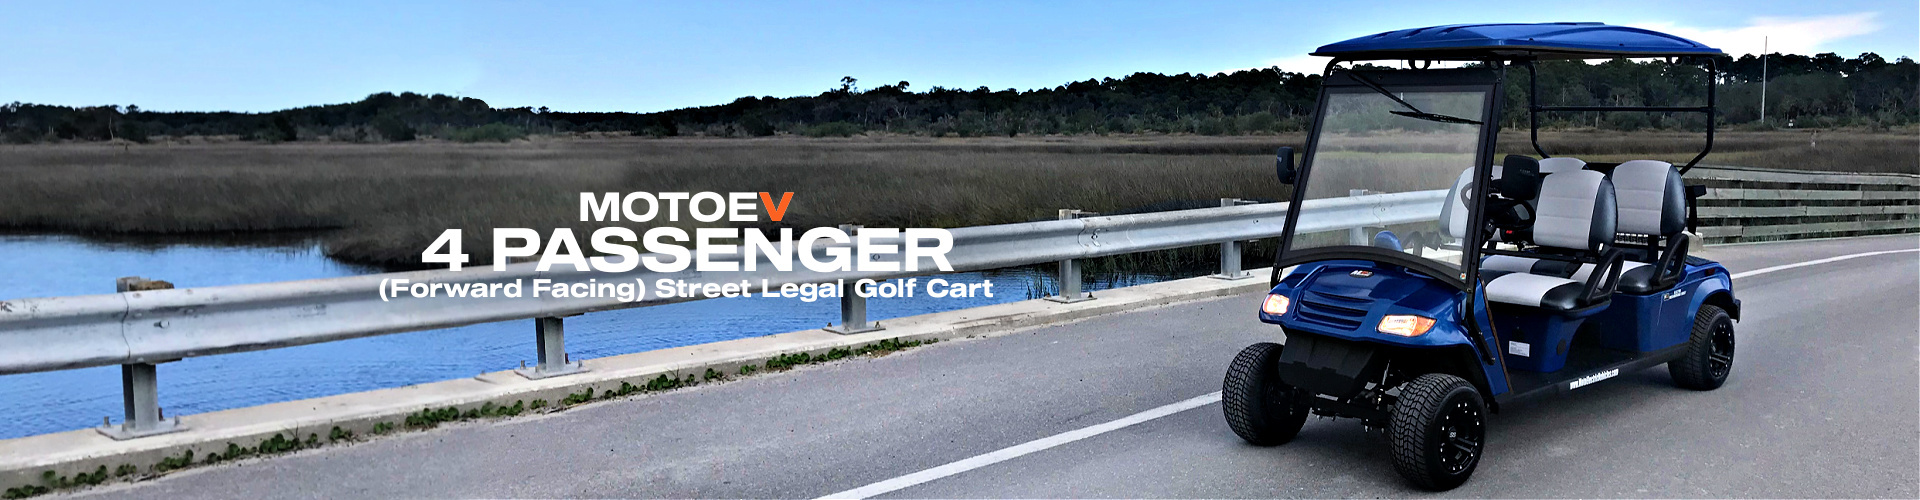 MotoEV 4 Passenger Forward Facing Street Legal Golf Cart